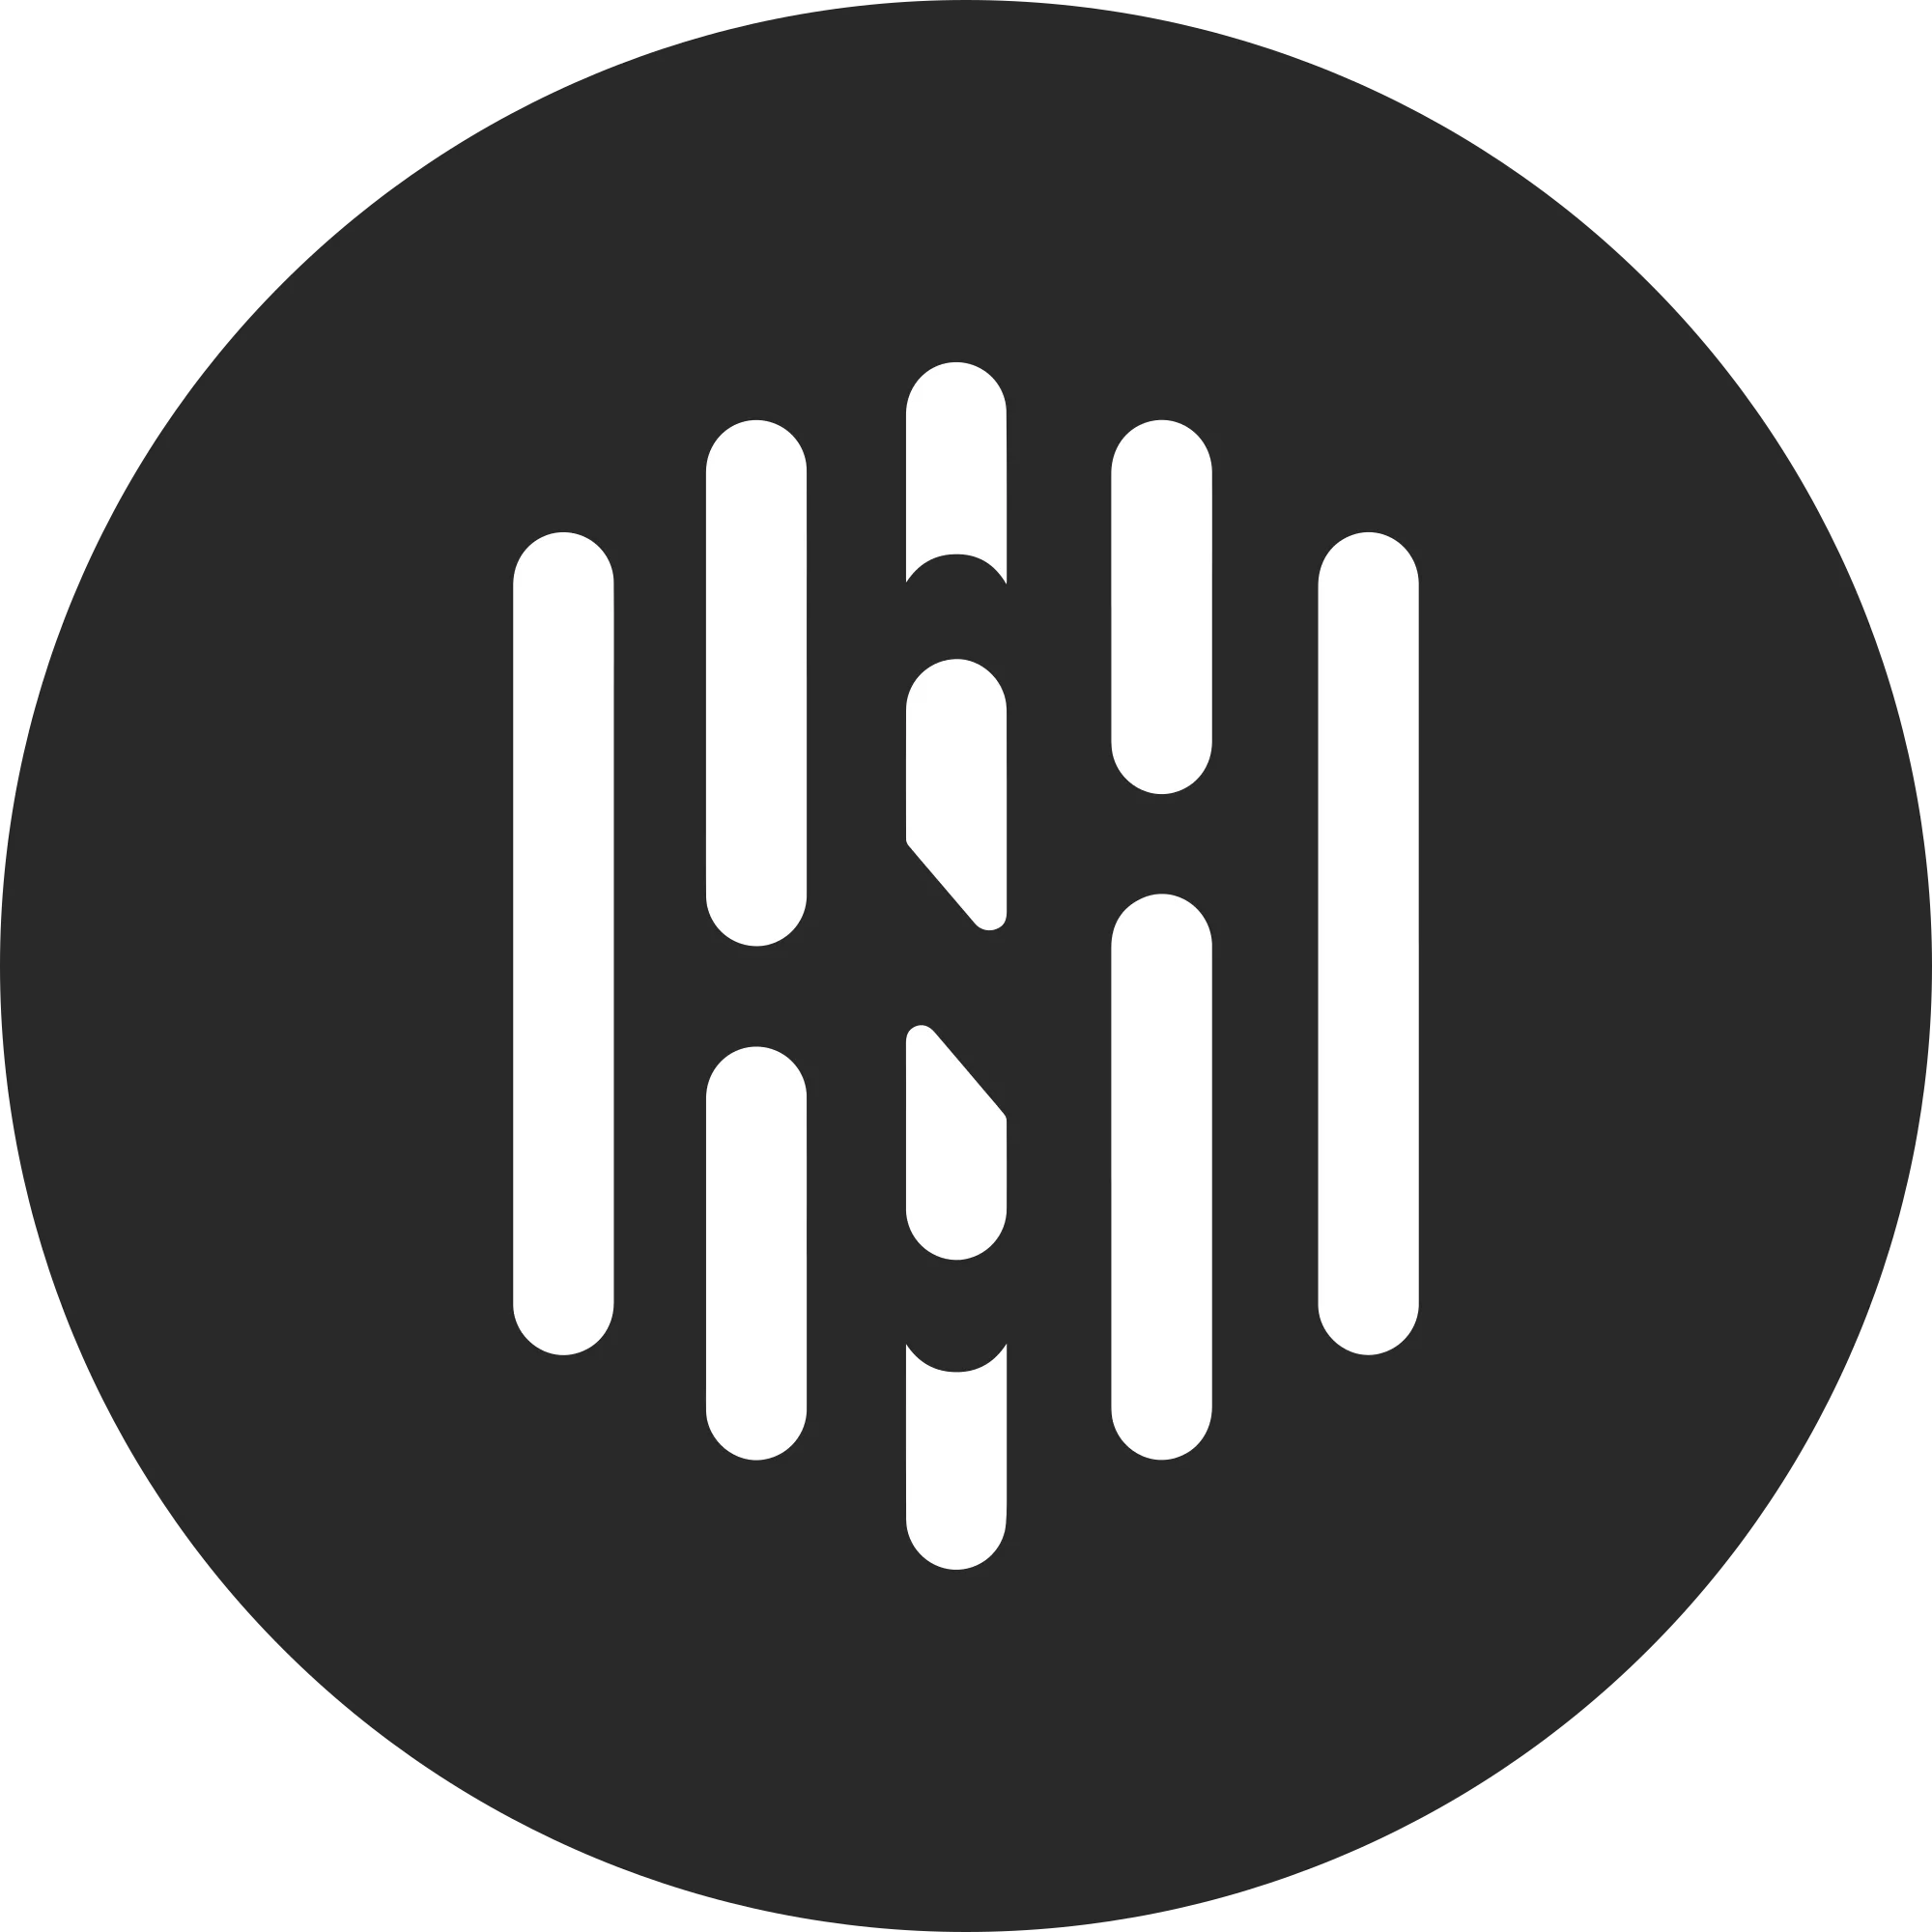 Hush logo in png format